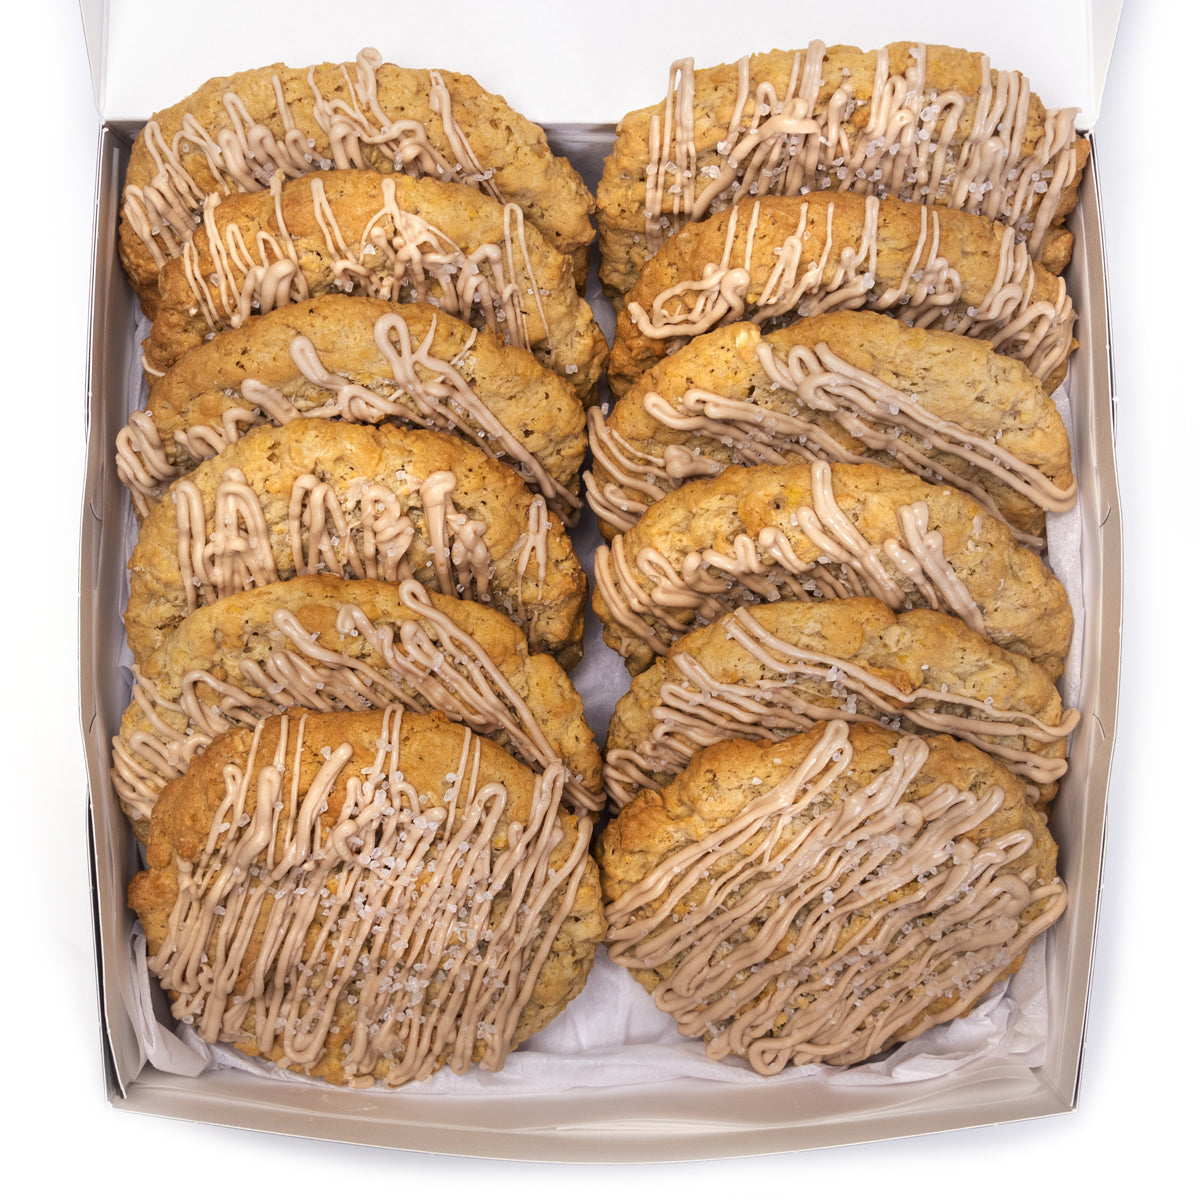 A Dozen Salted Caramel Cornflake Cookies